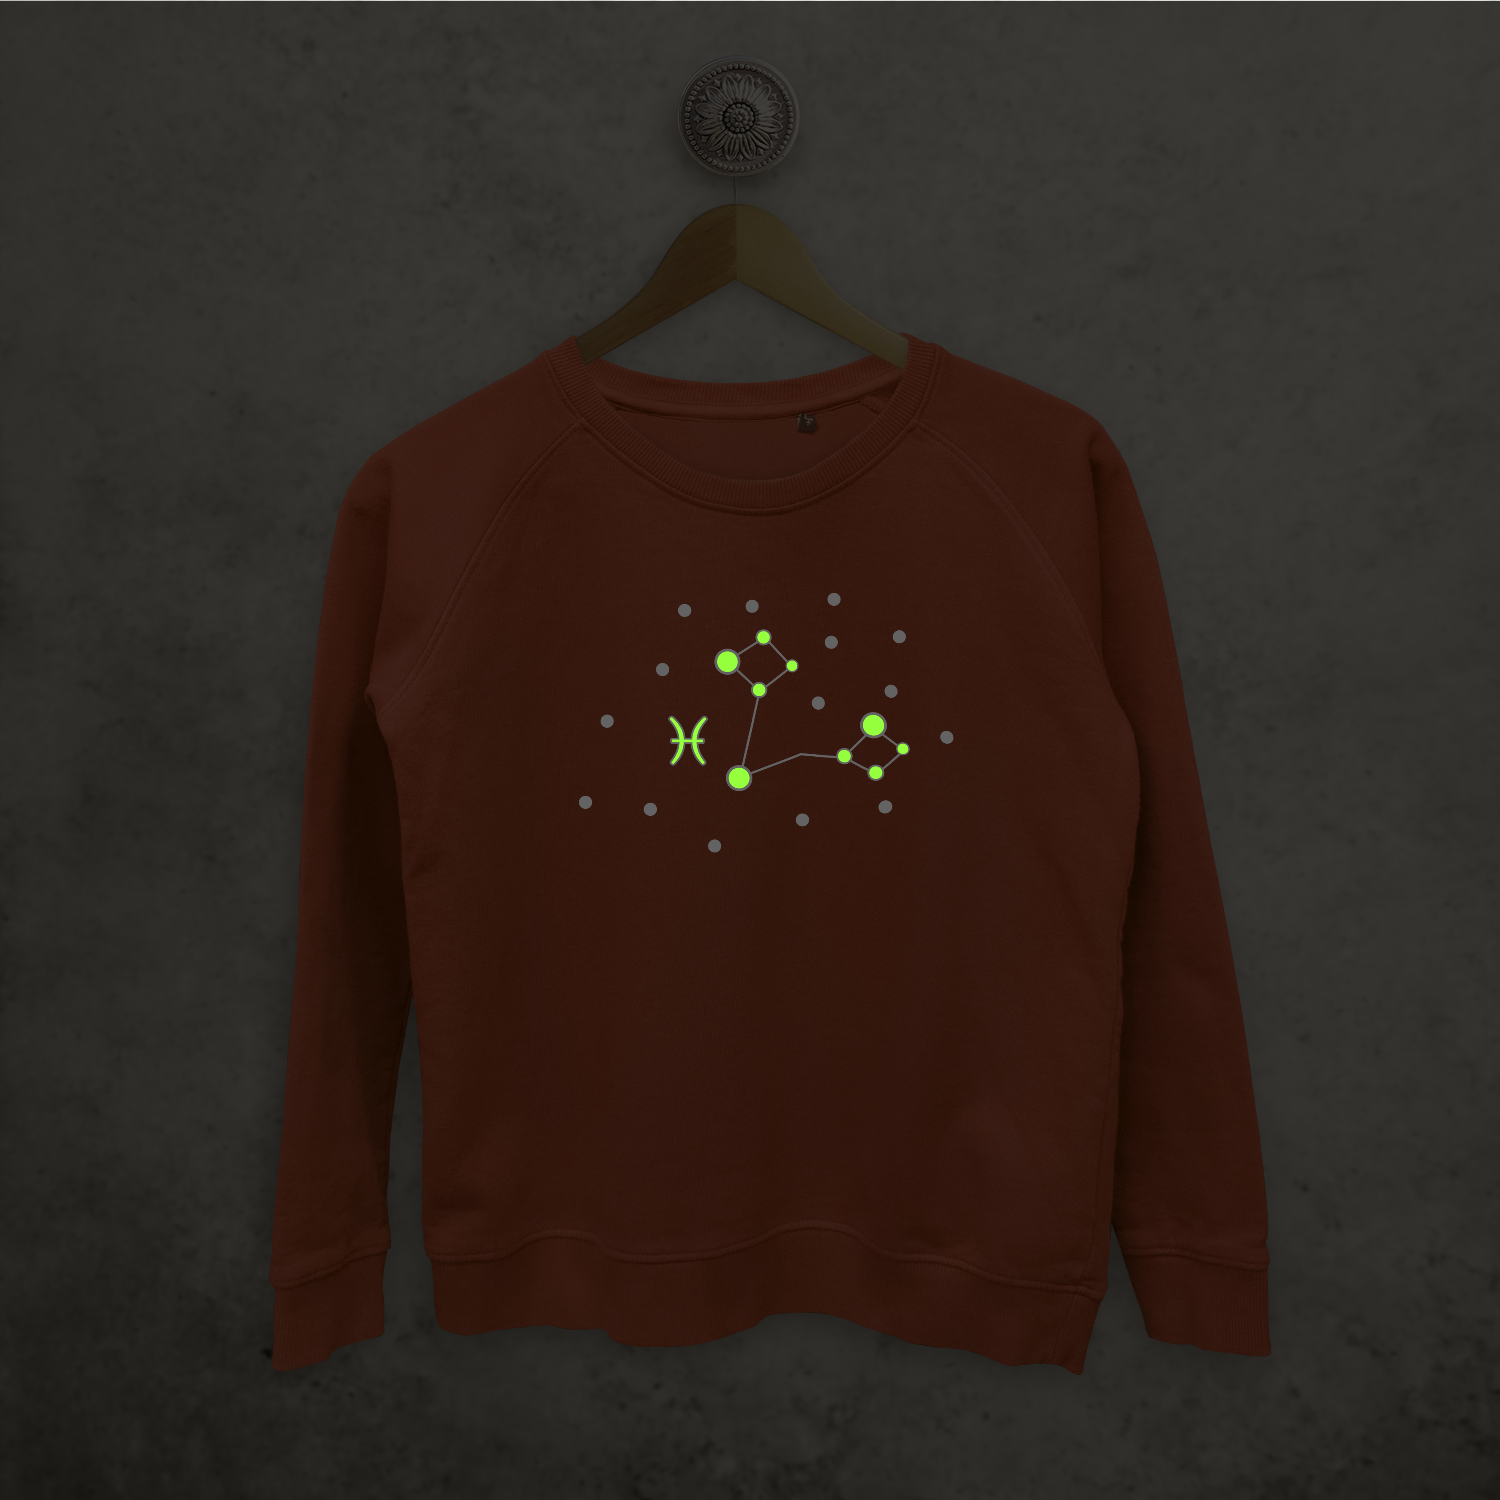 Star sign glow in the dark sweater